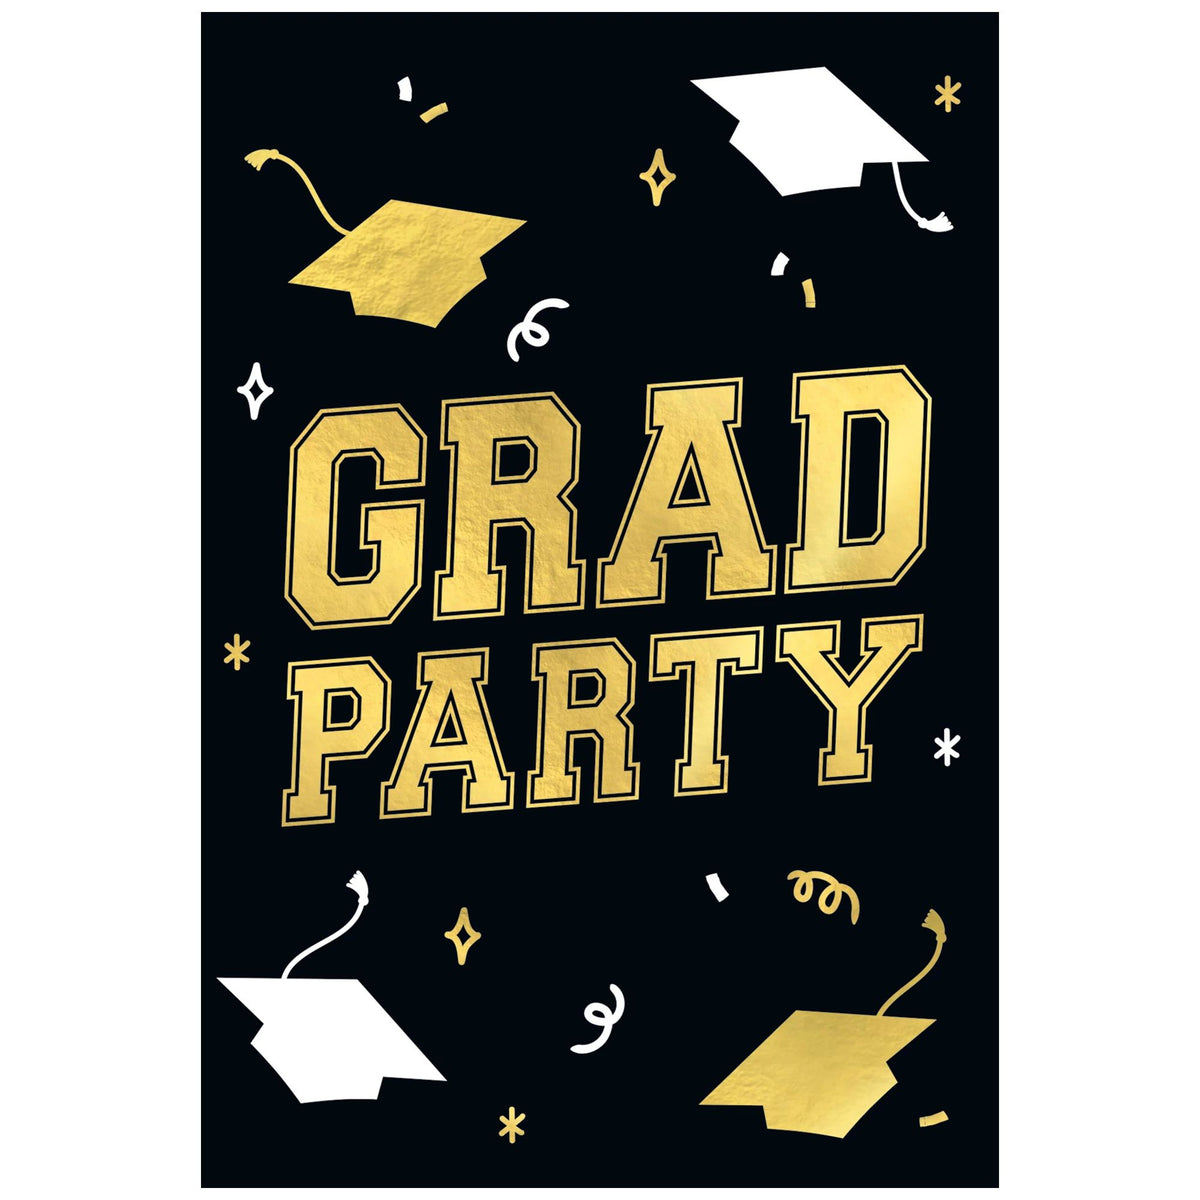 Graduation Party Invitations